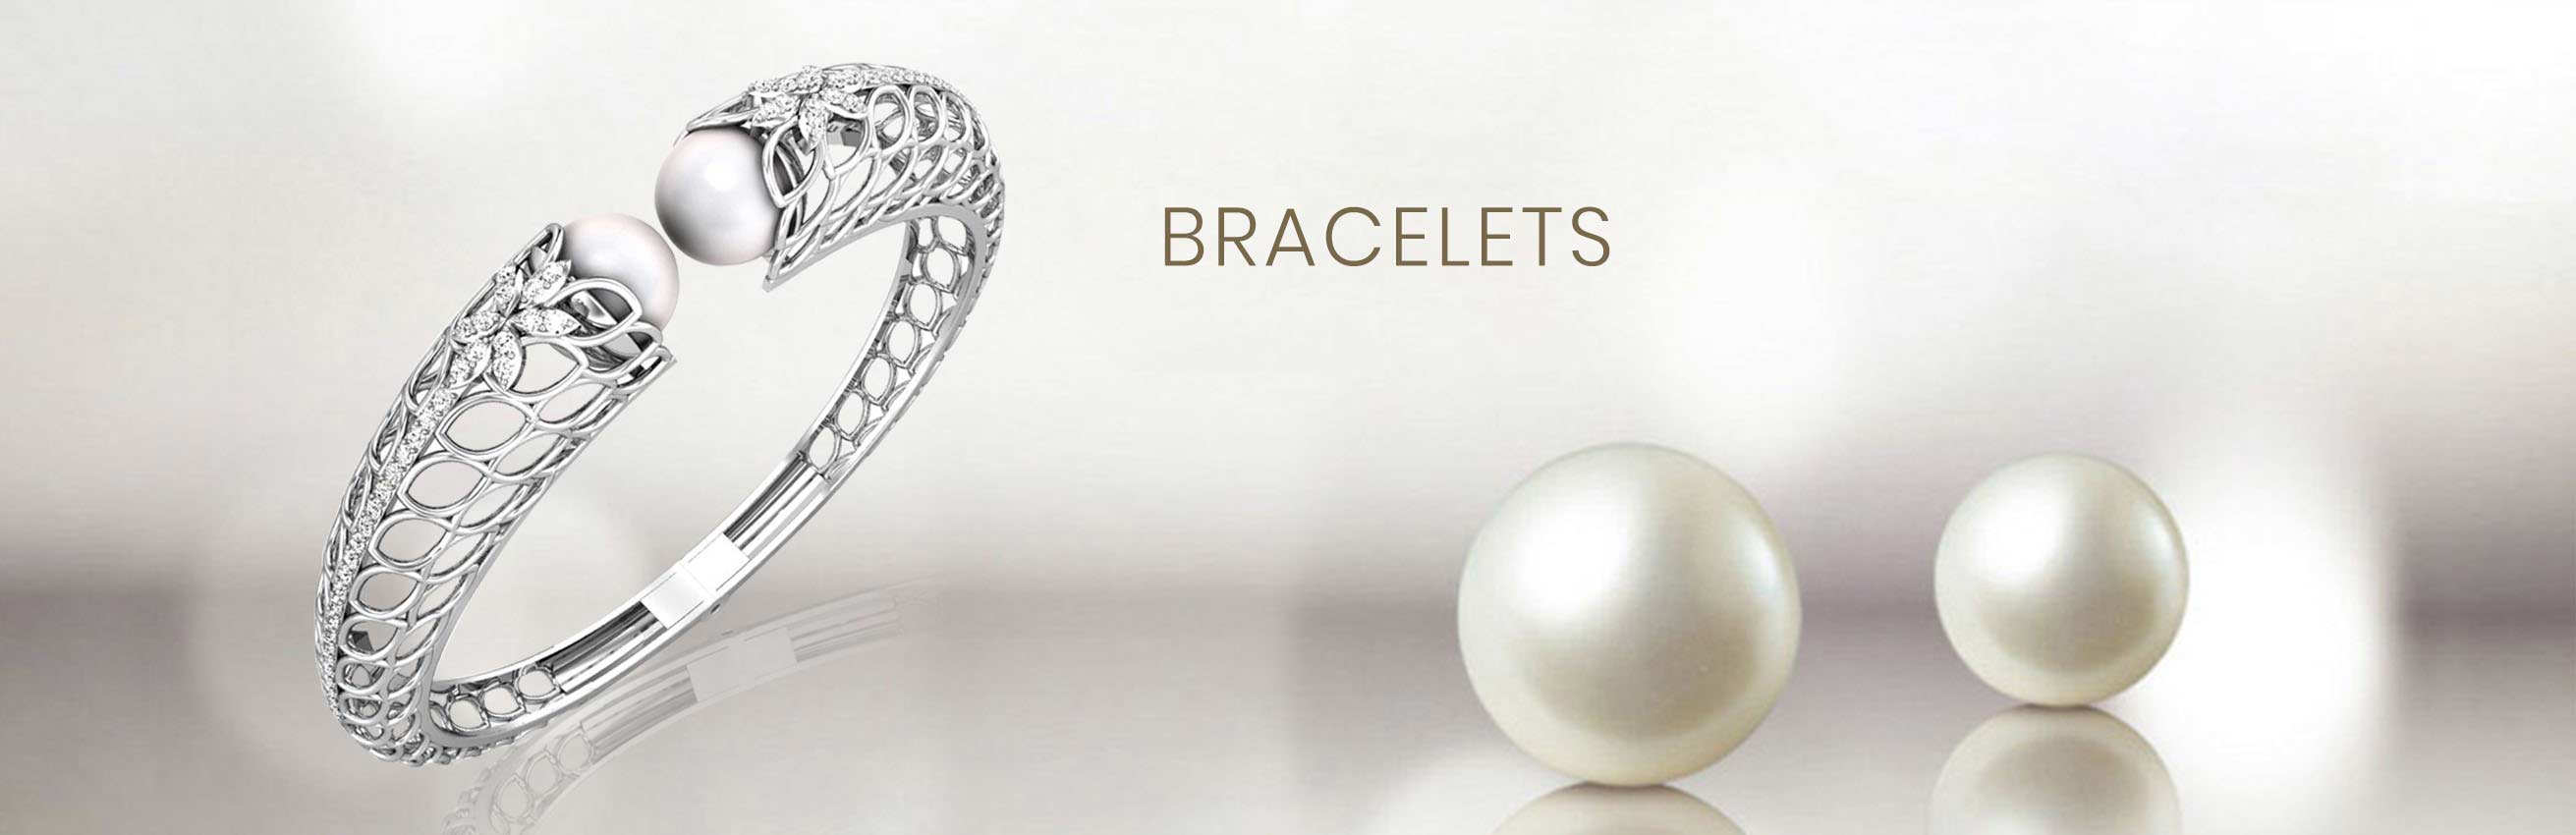 jewellery_bracelet_banner